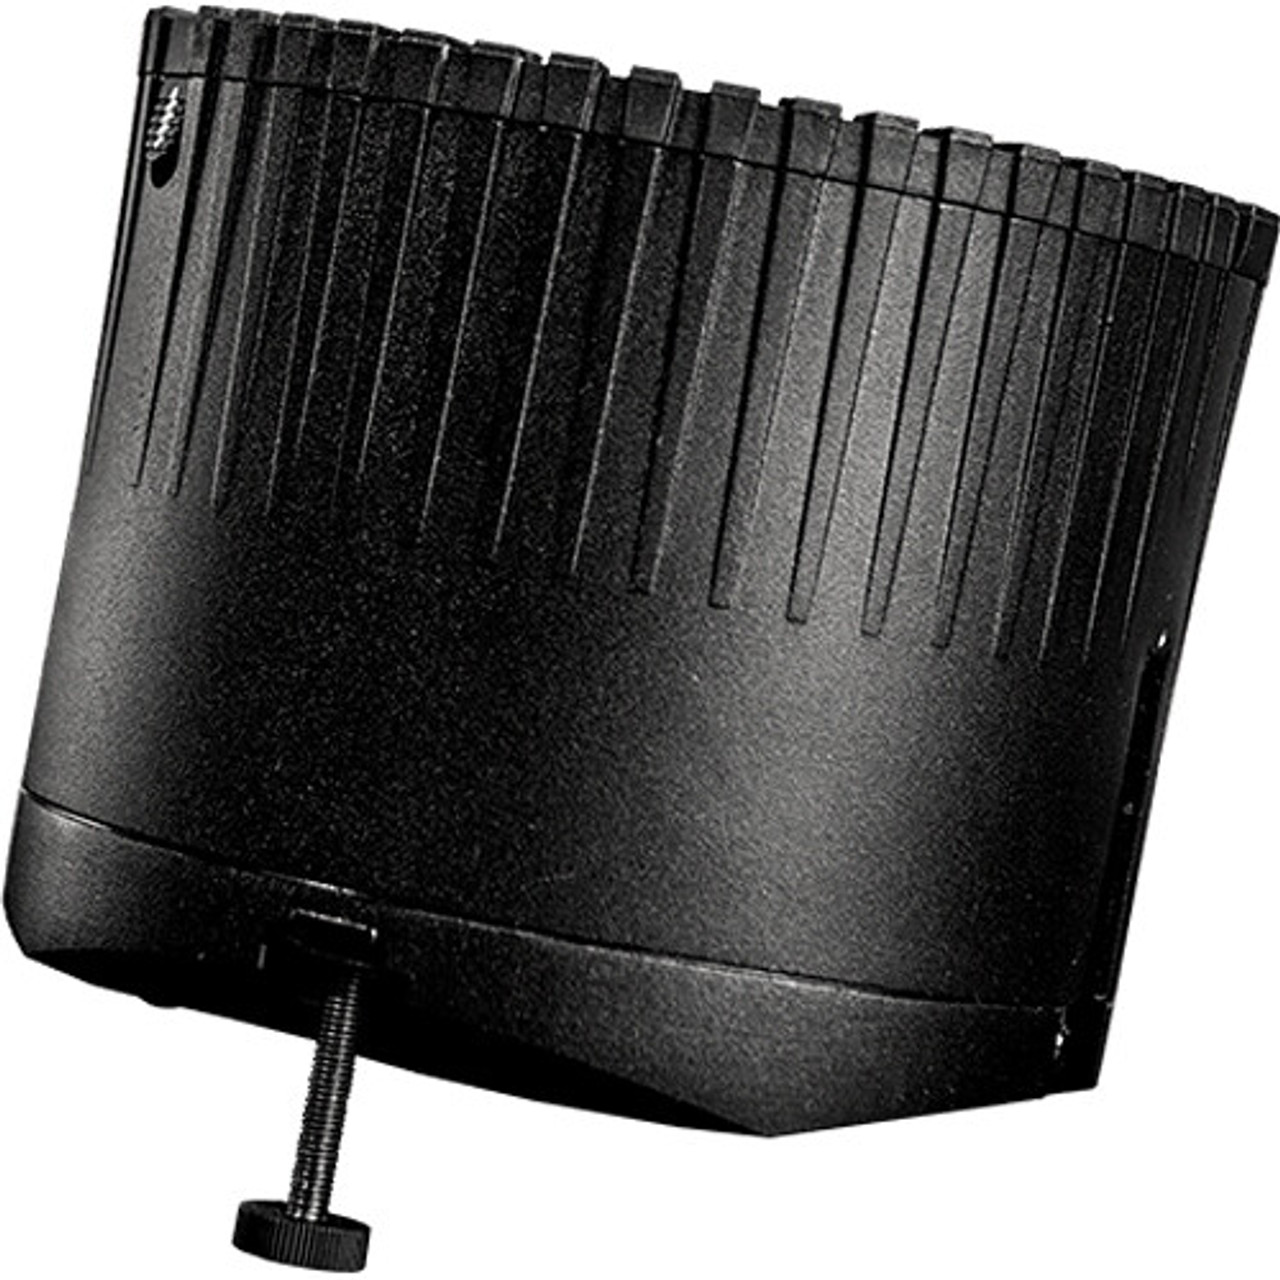 Astera AX9 PowerPAR LED Fixture (AX9-Individual)